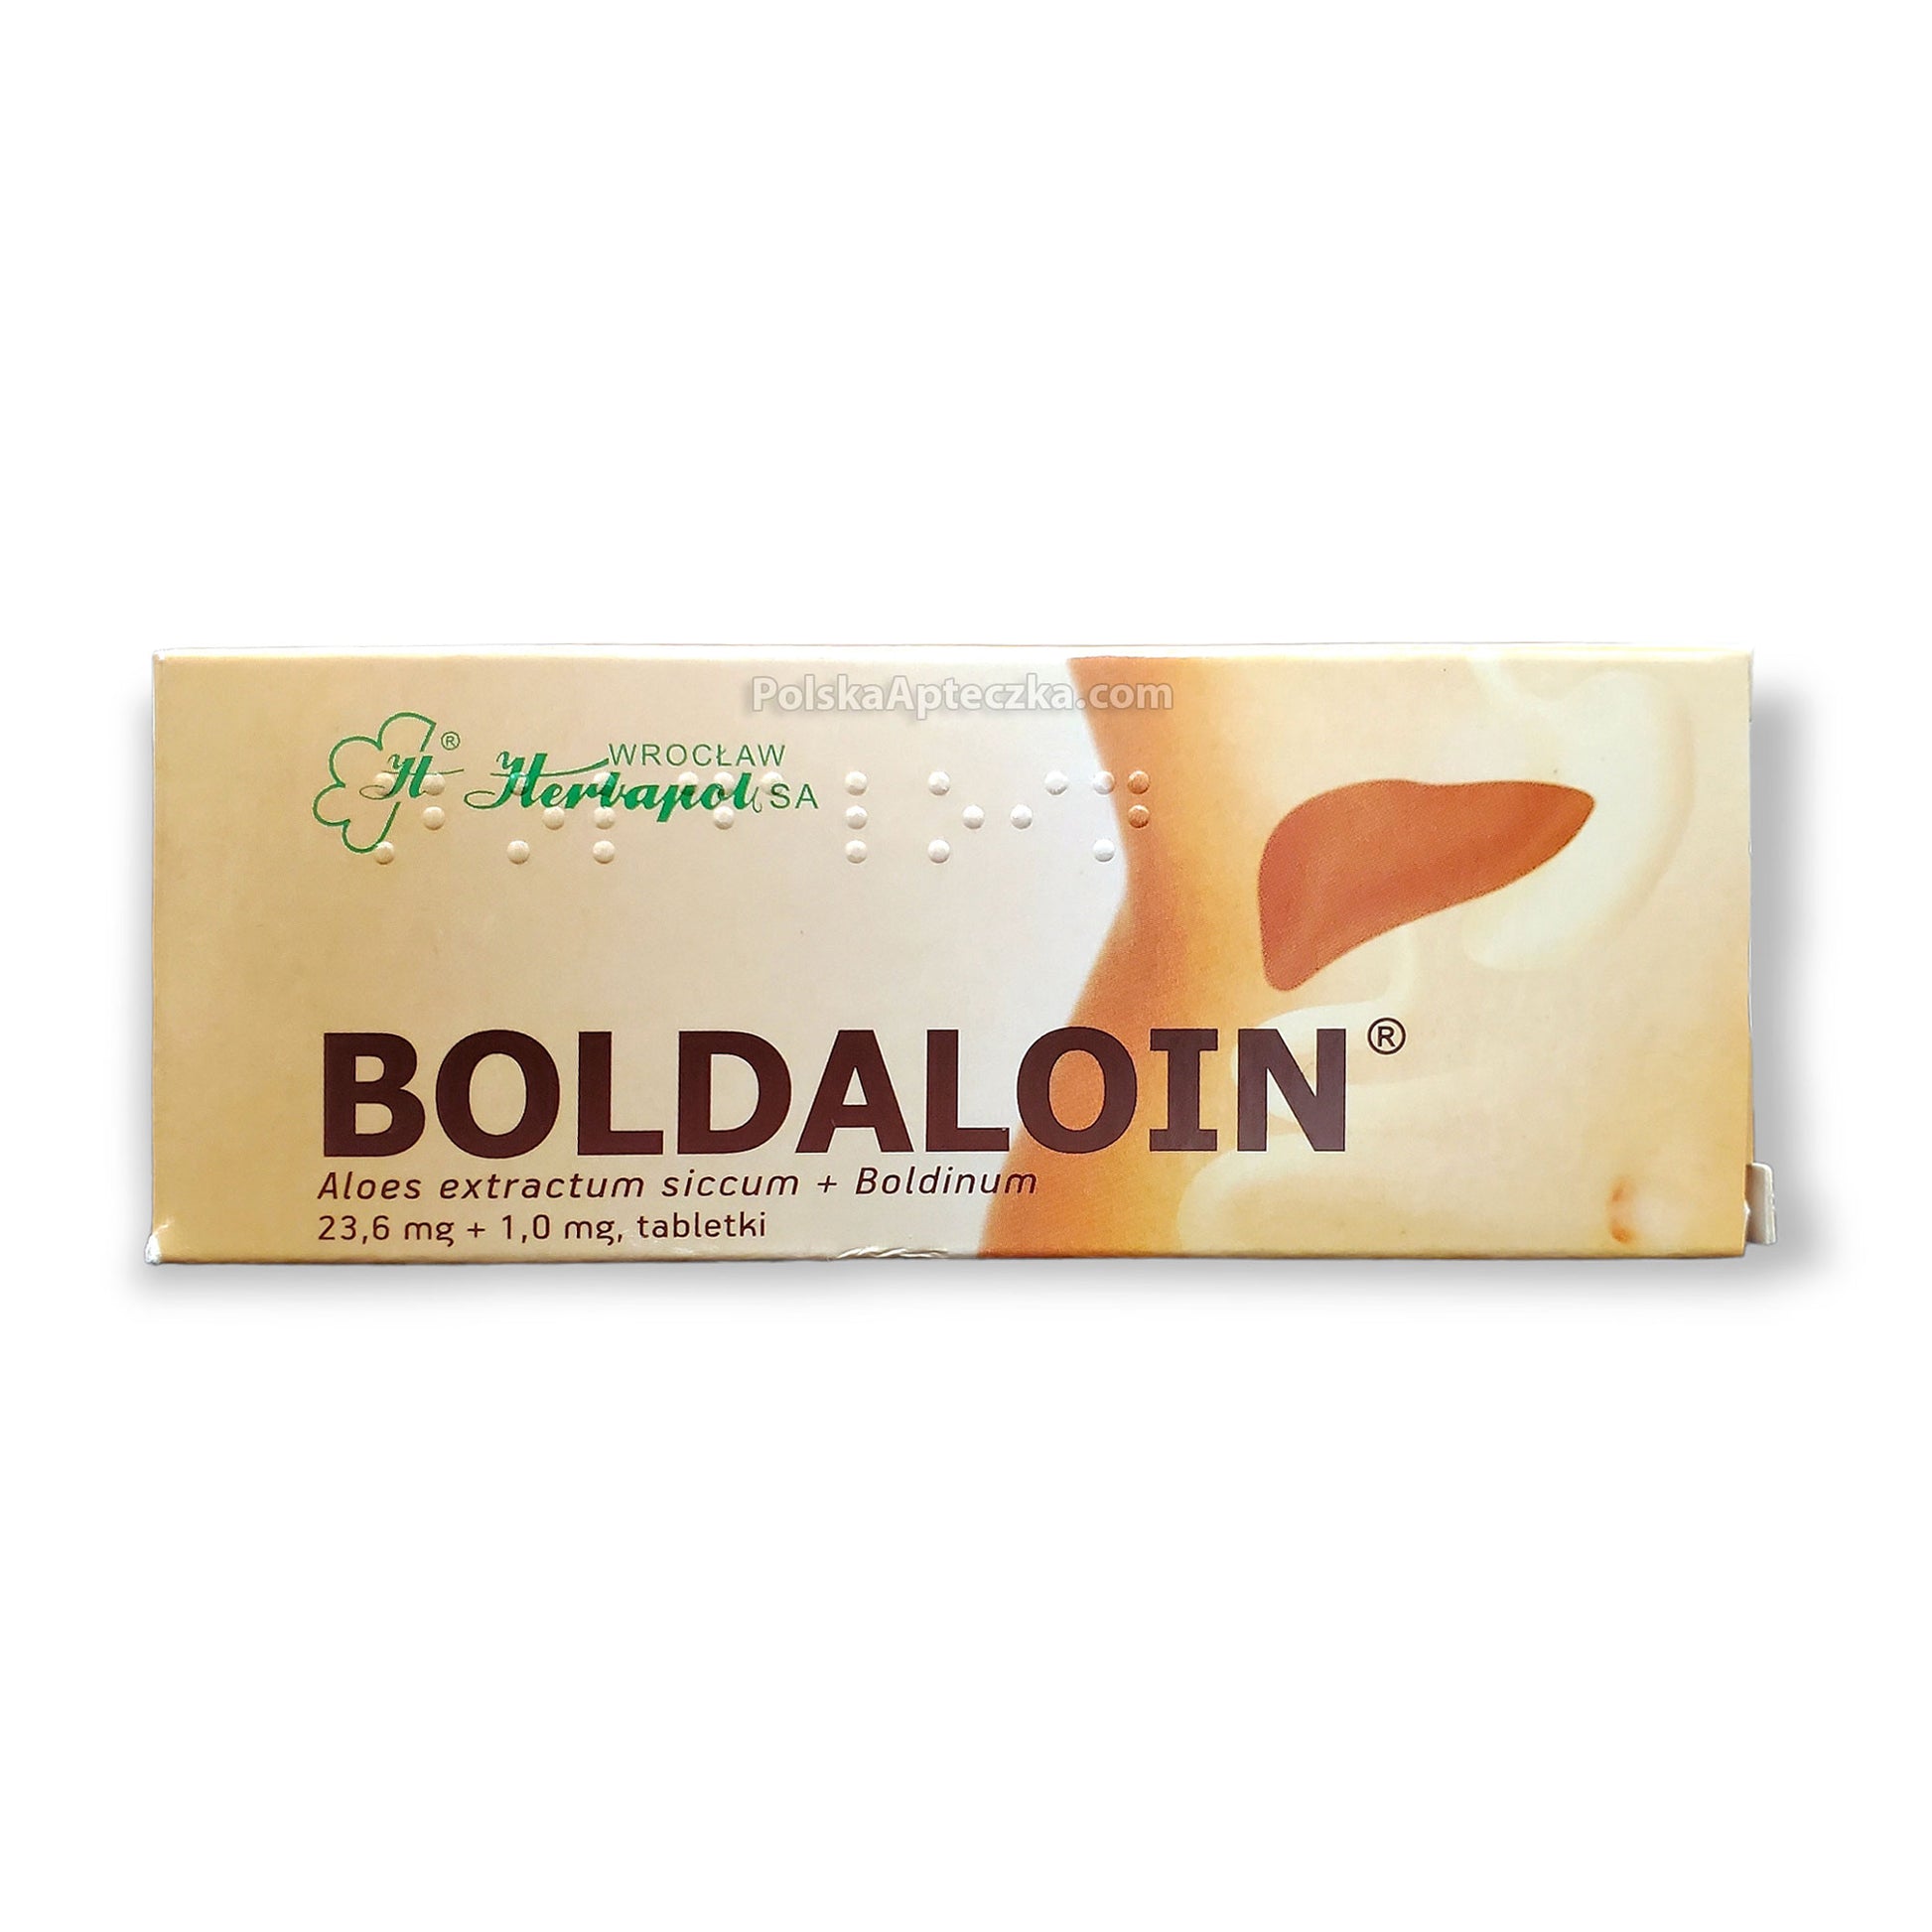 Boldaloin tablets, Herbapol